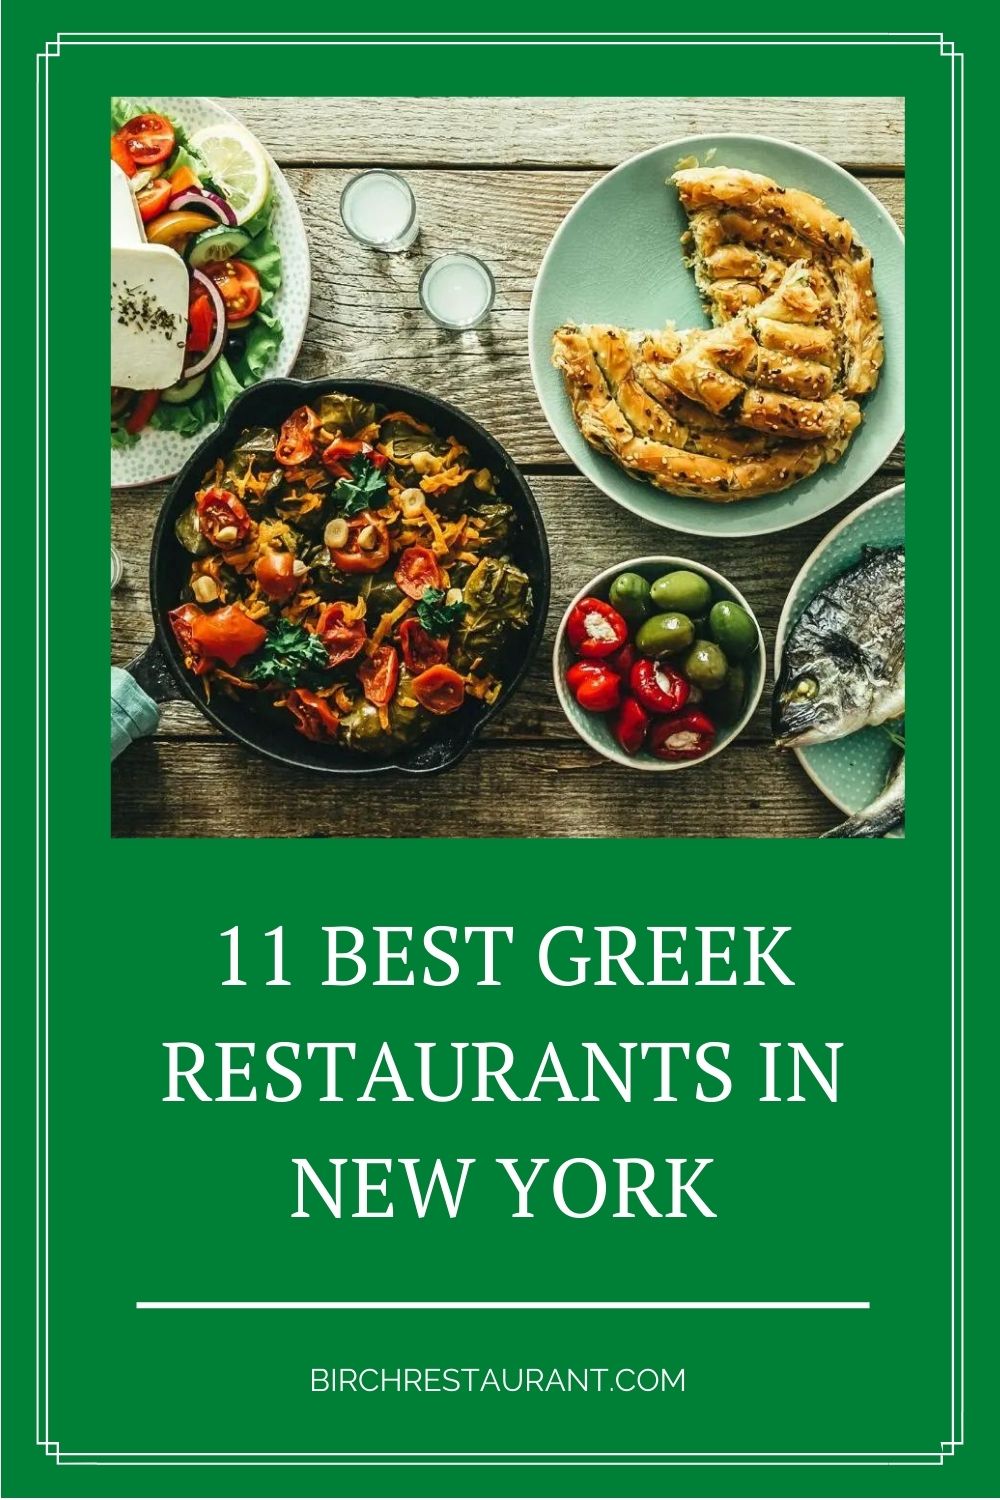 Best Greek Restaurants in New York